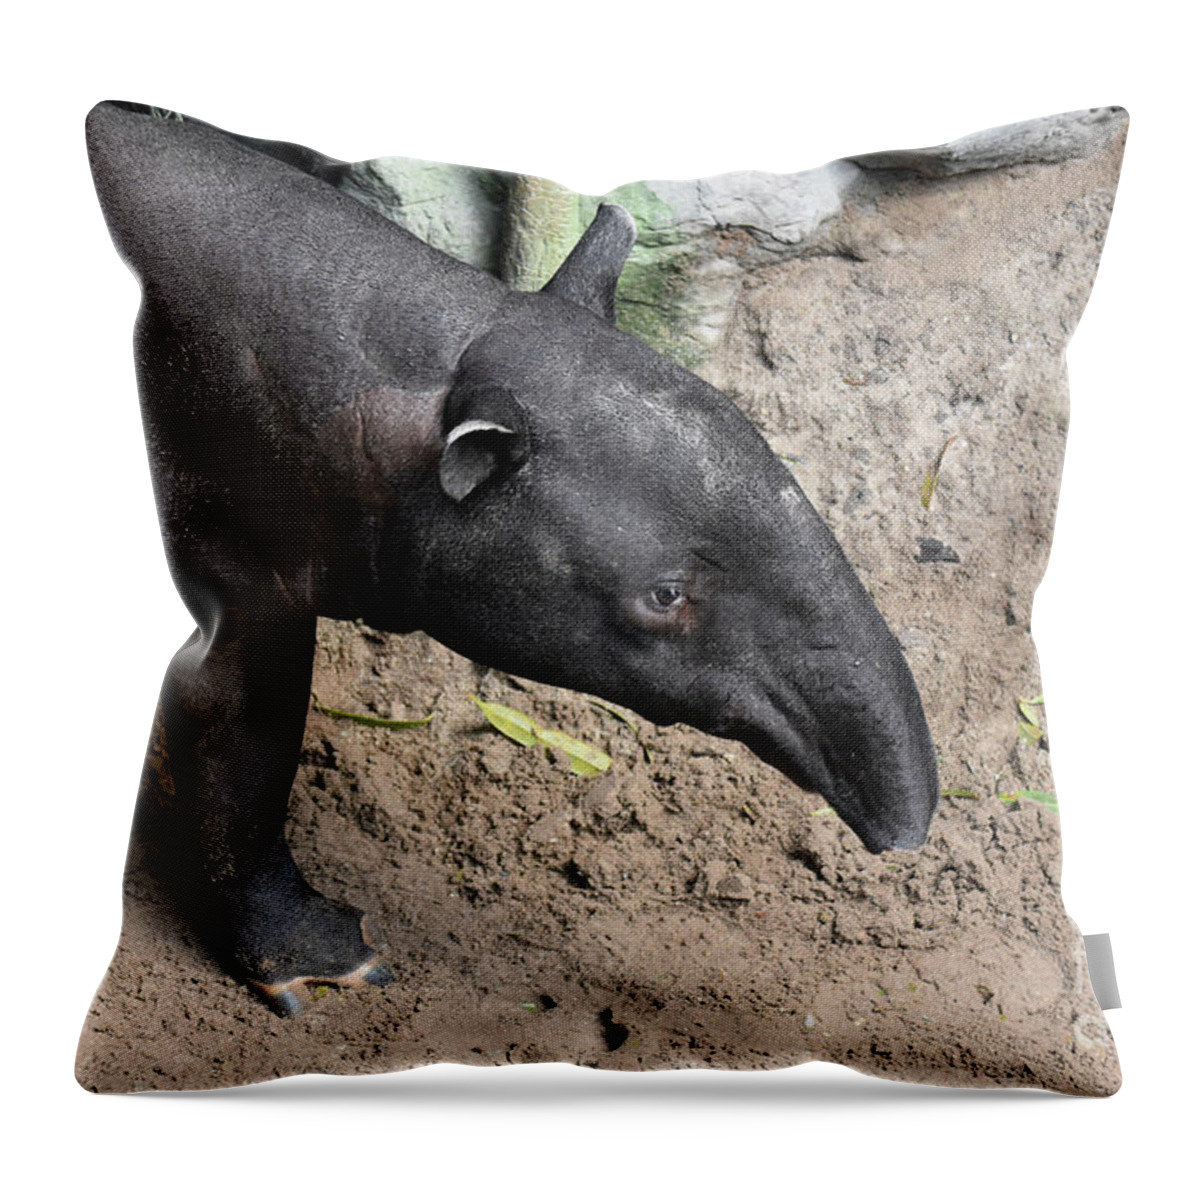 Tapir Throw Pillow featuring the photograph Wild animal photo of a bairds tapir by DejaVu Designs